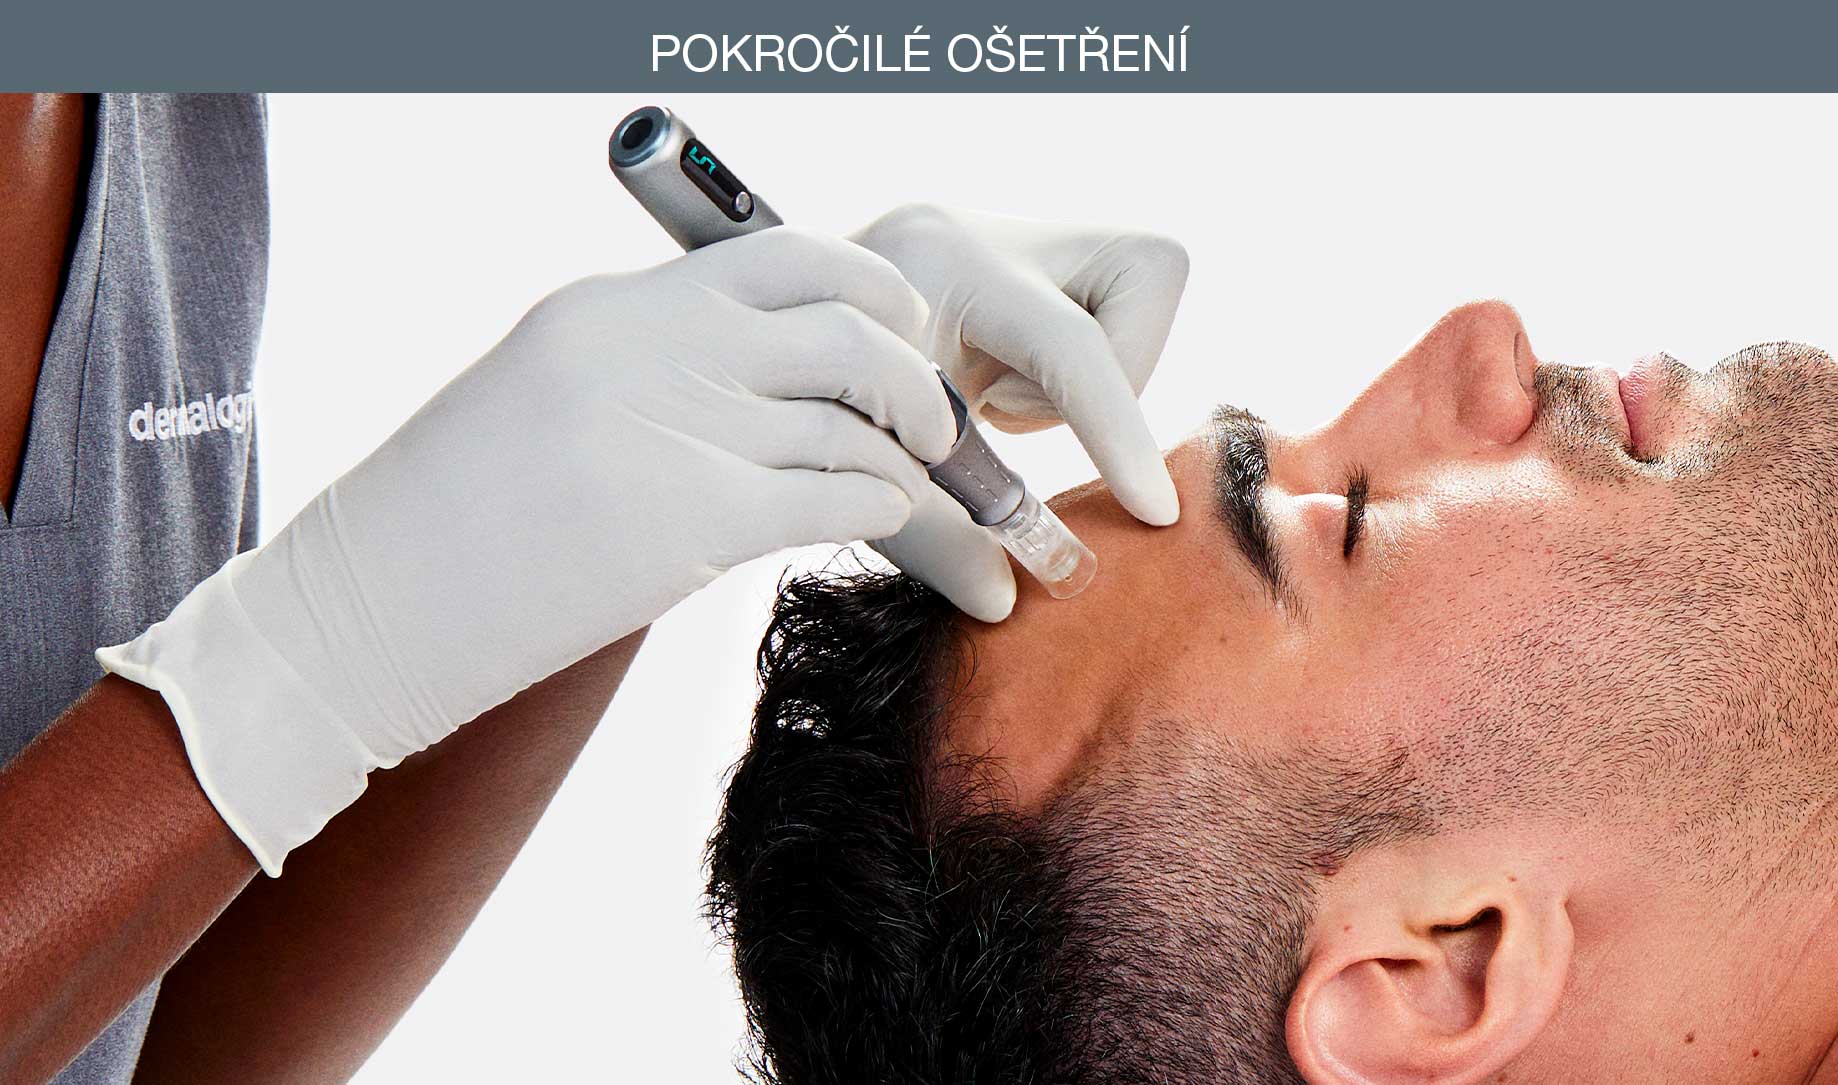 pokrocile-osetreni-pro-microneedling-dermalogica